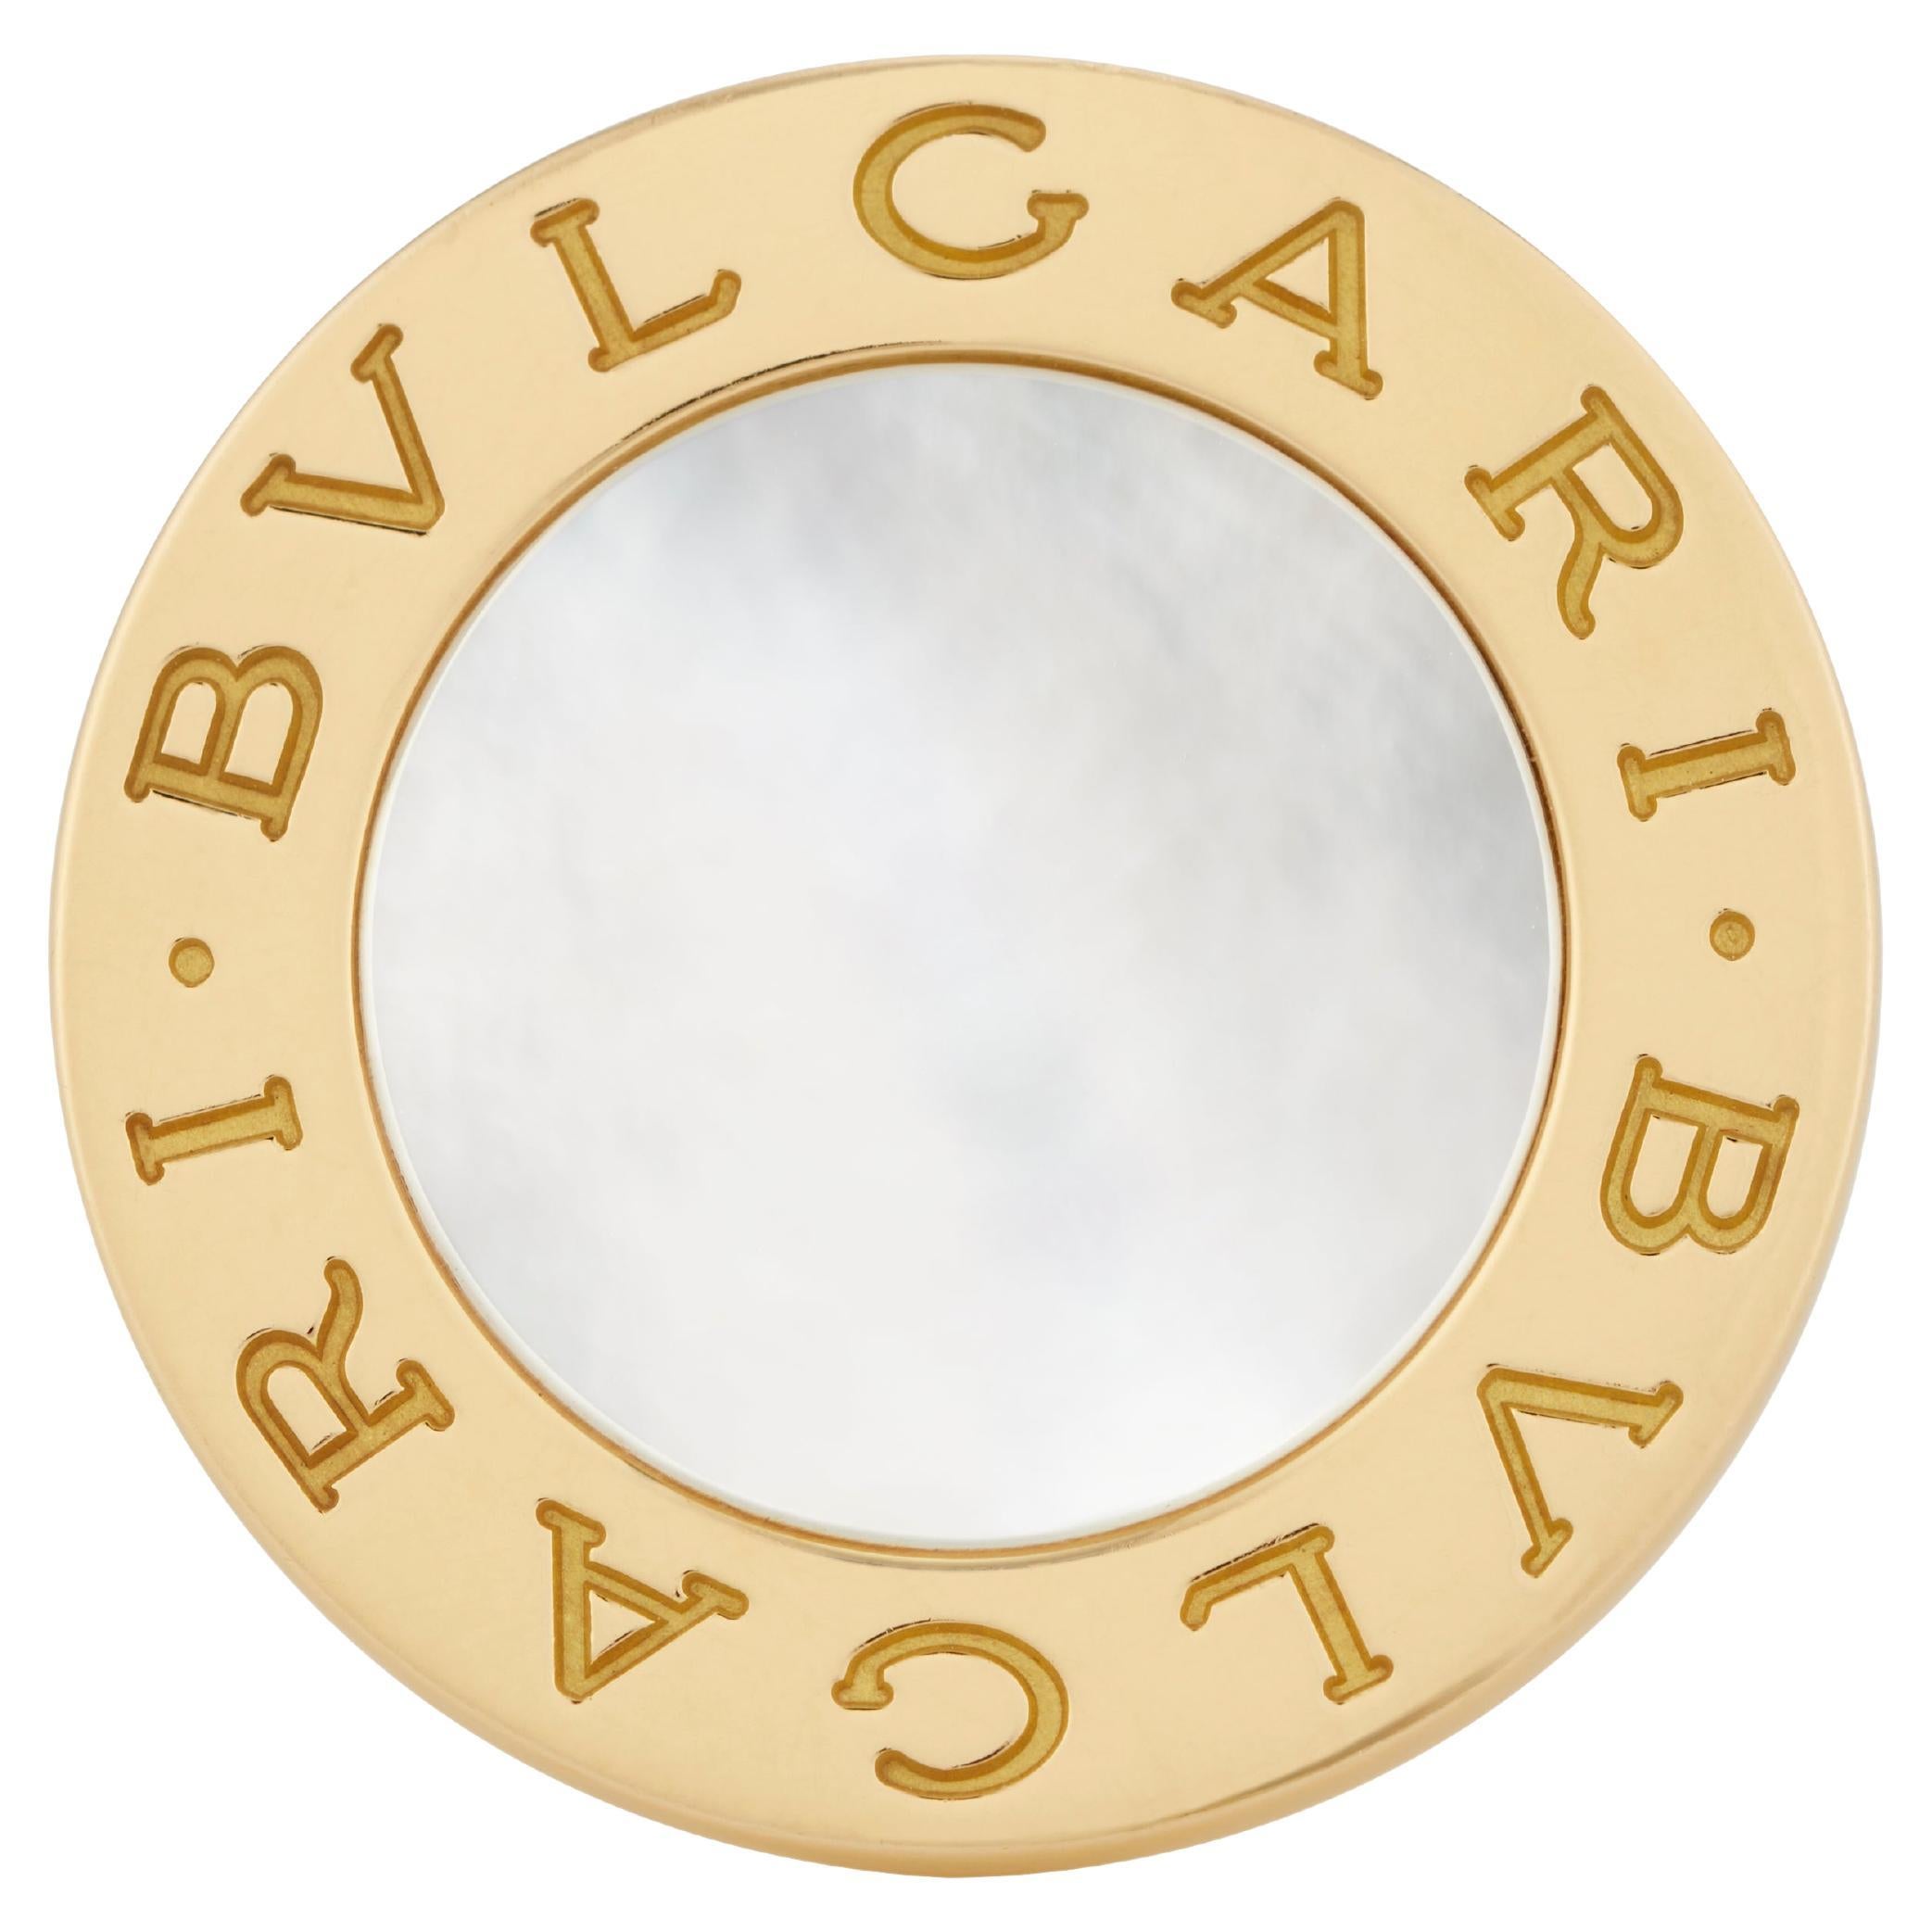 Bulgari 'Bvlgari Bvlgari' Mother of Pearl Large Version Ring in 18K Yellow Gold